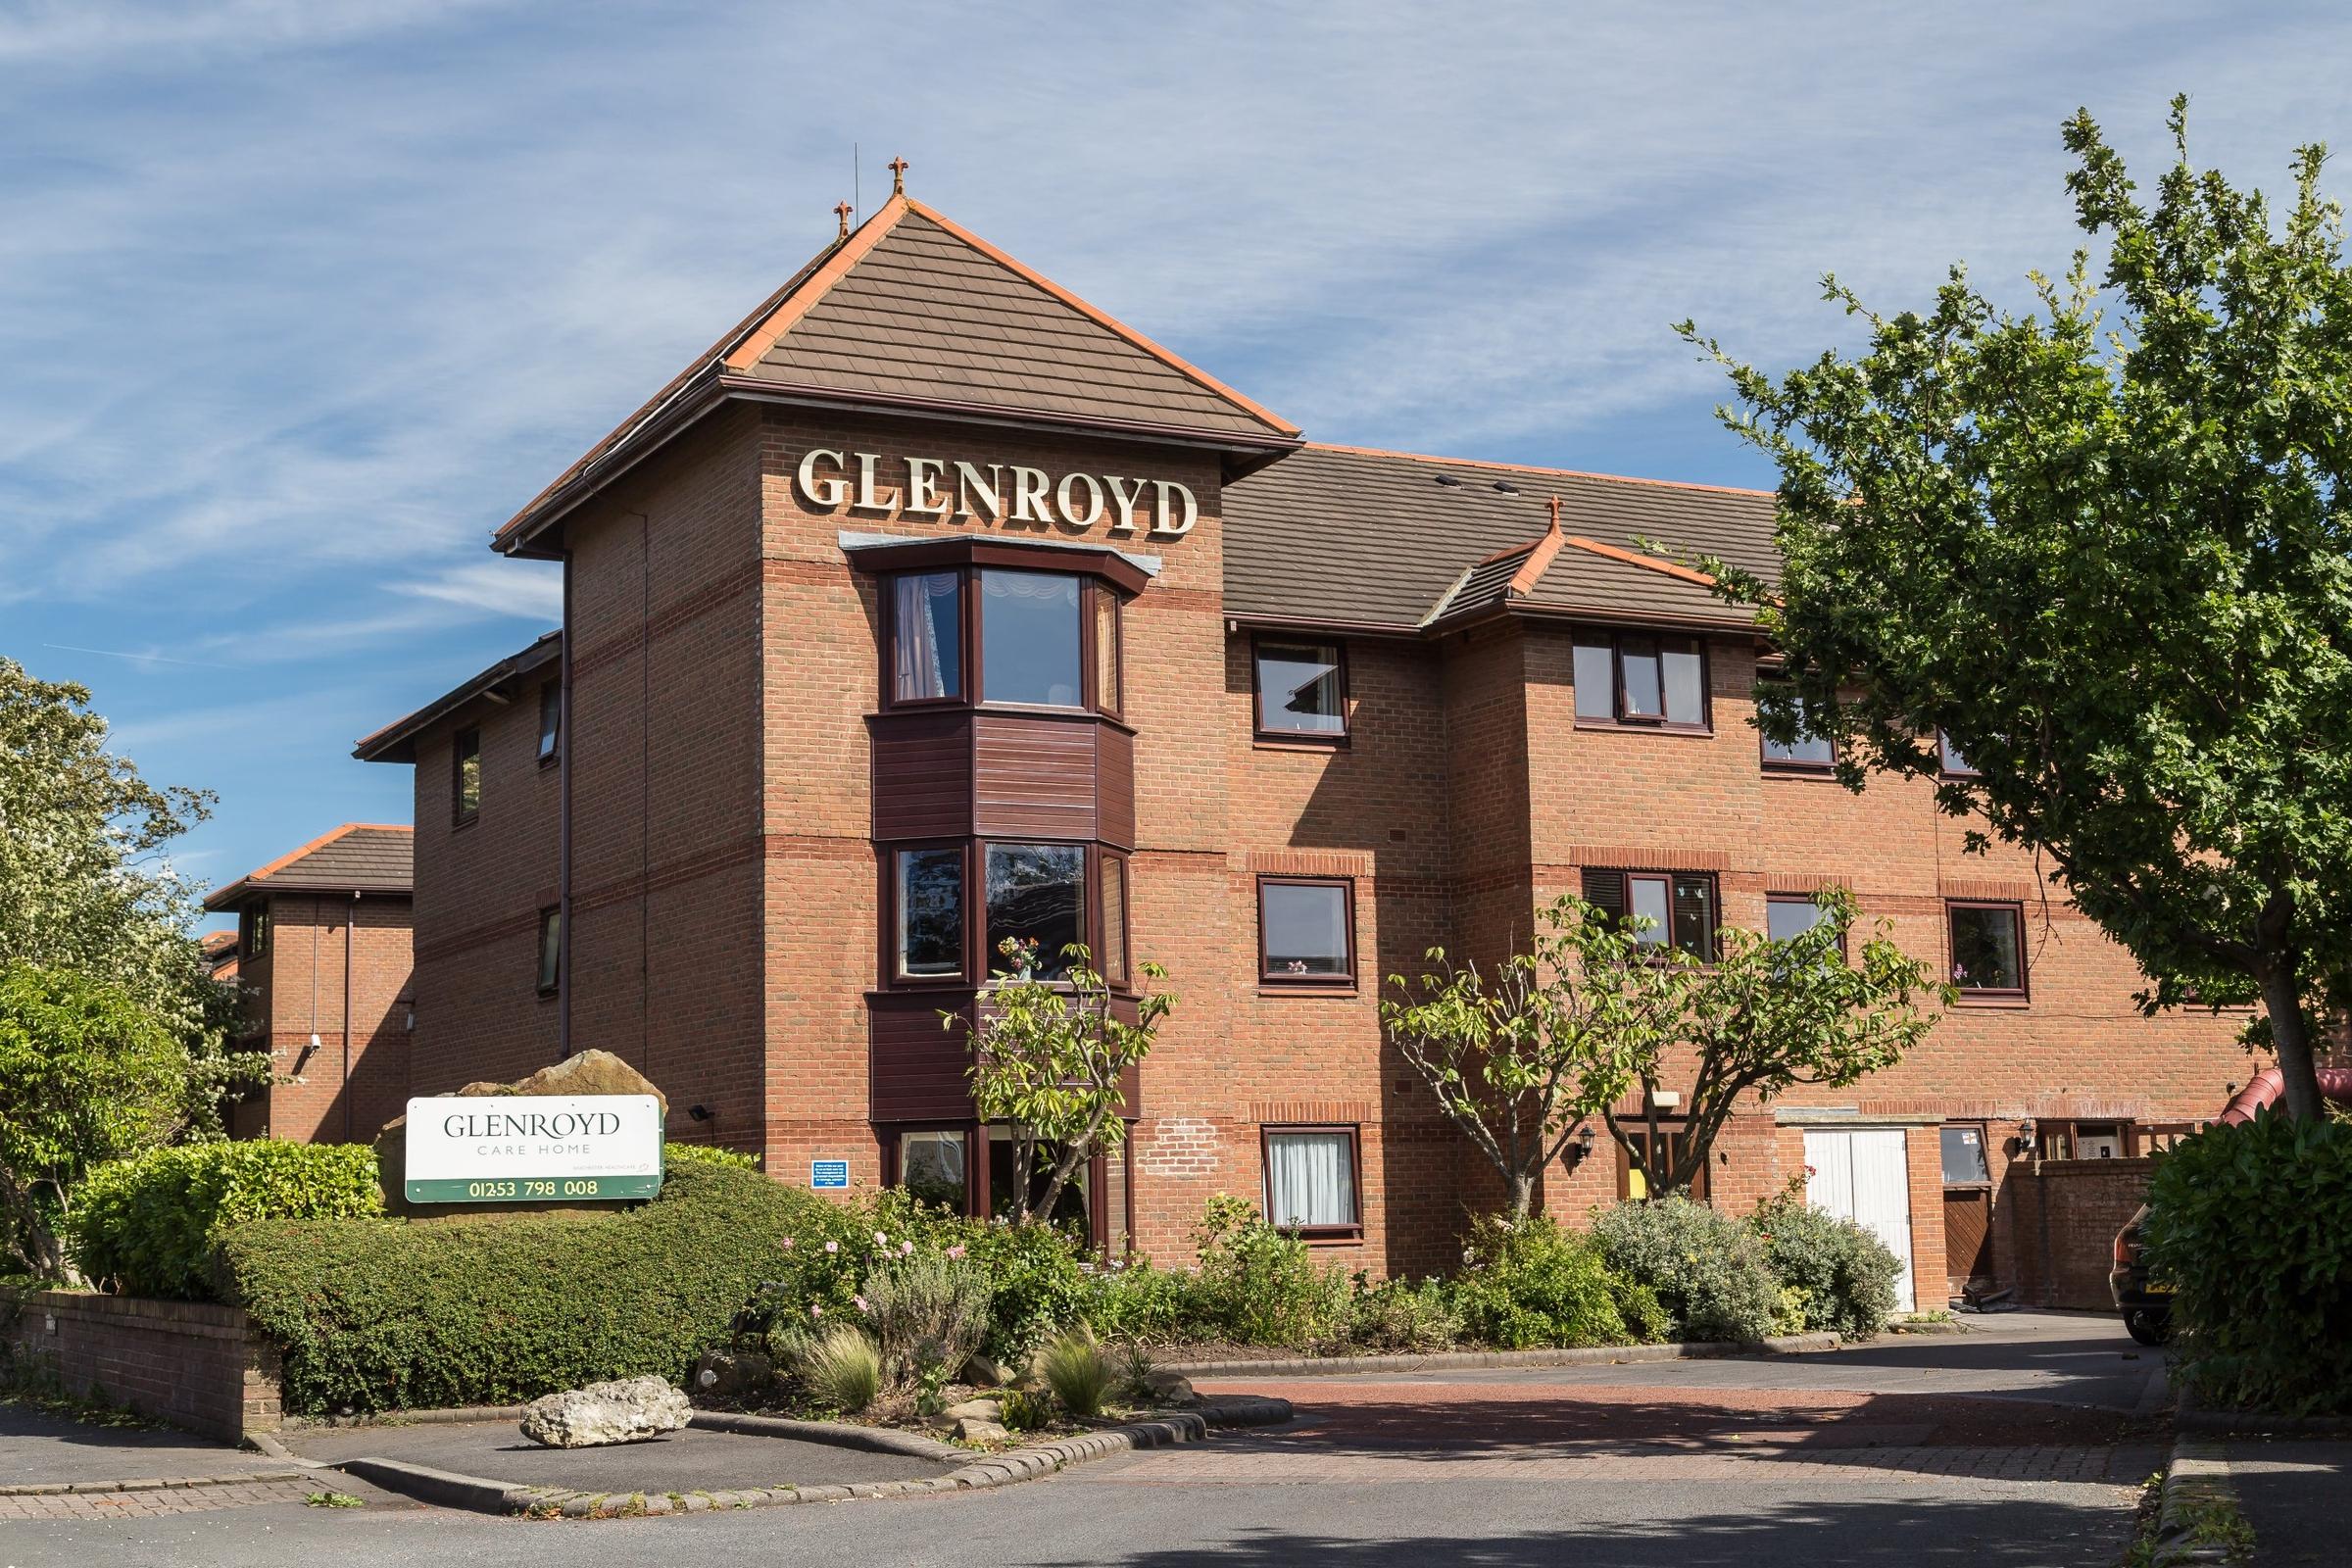 Glenroyd Care Home